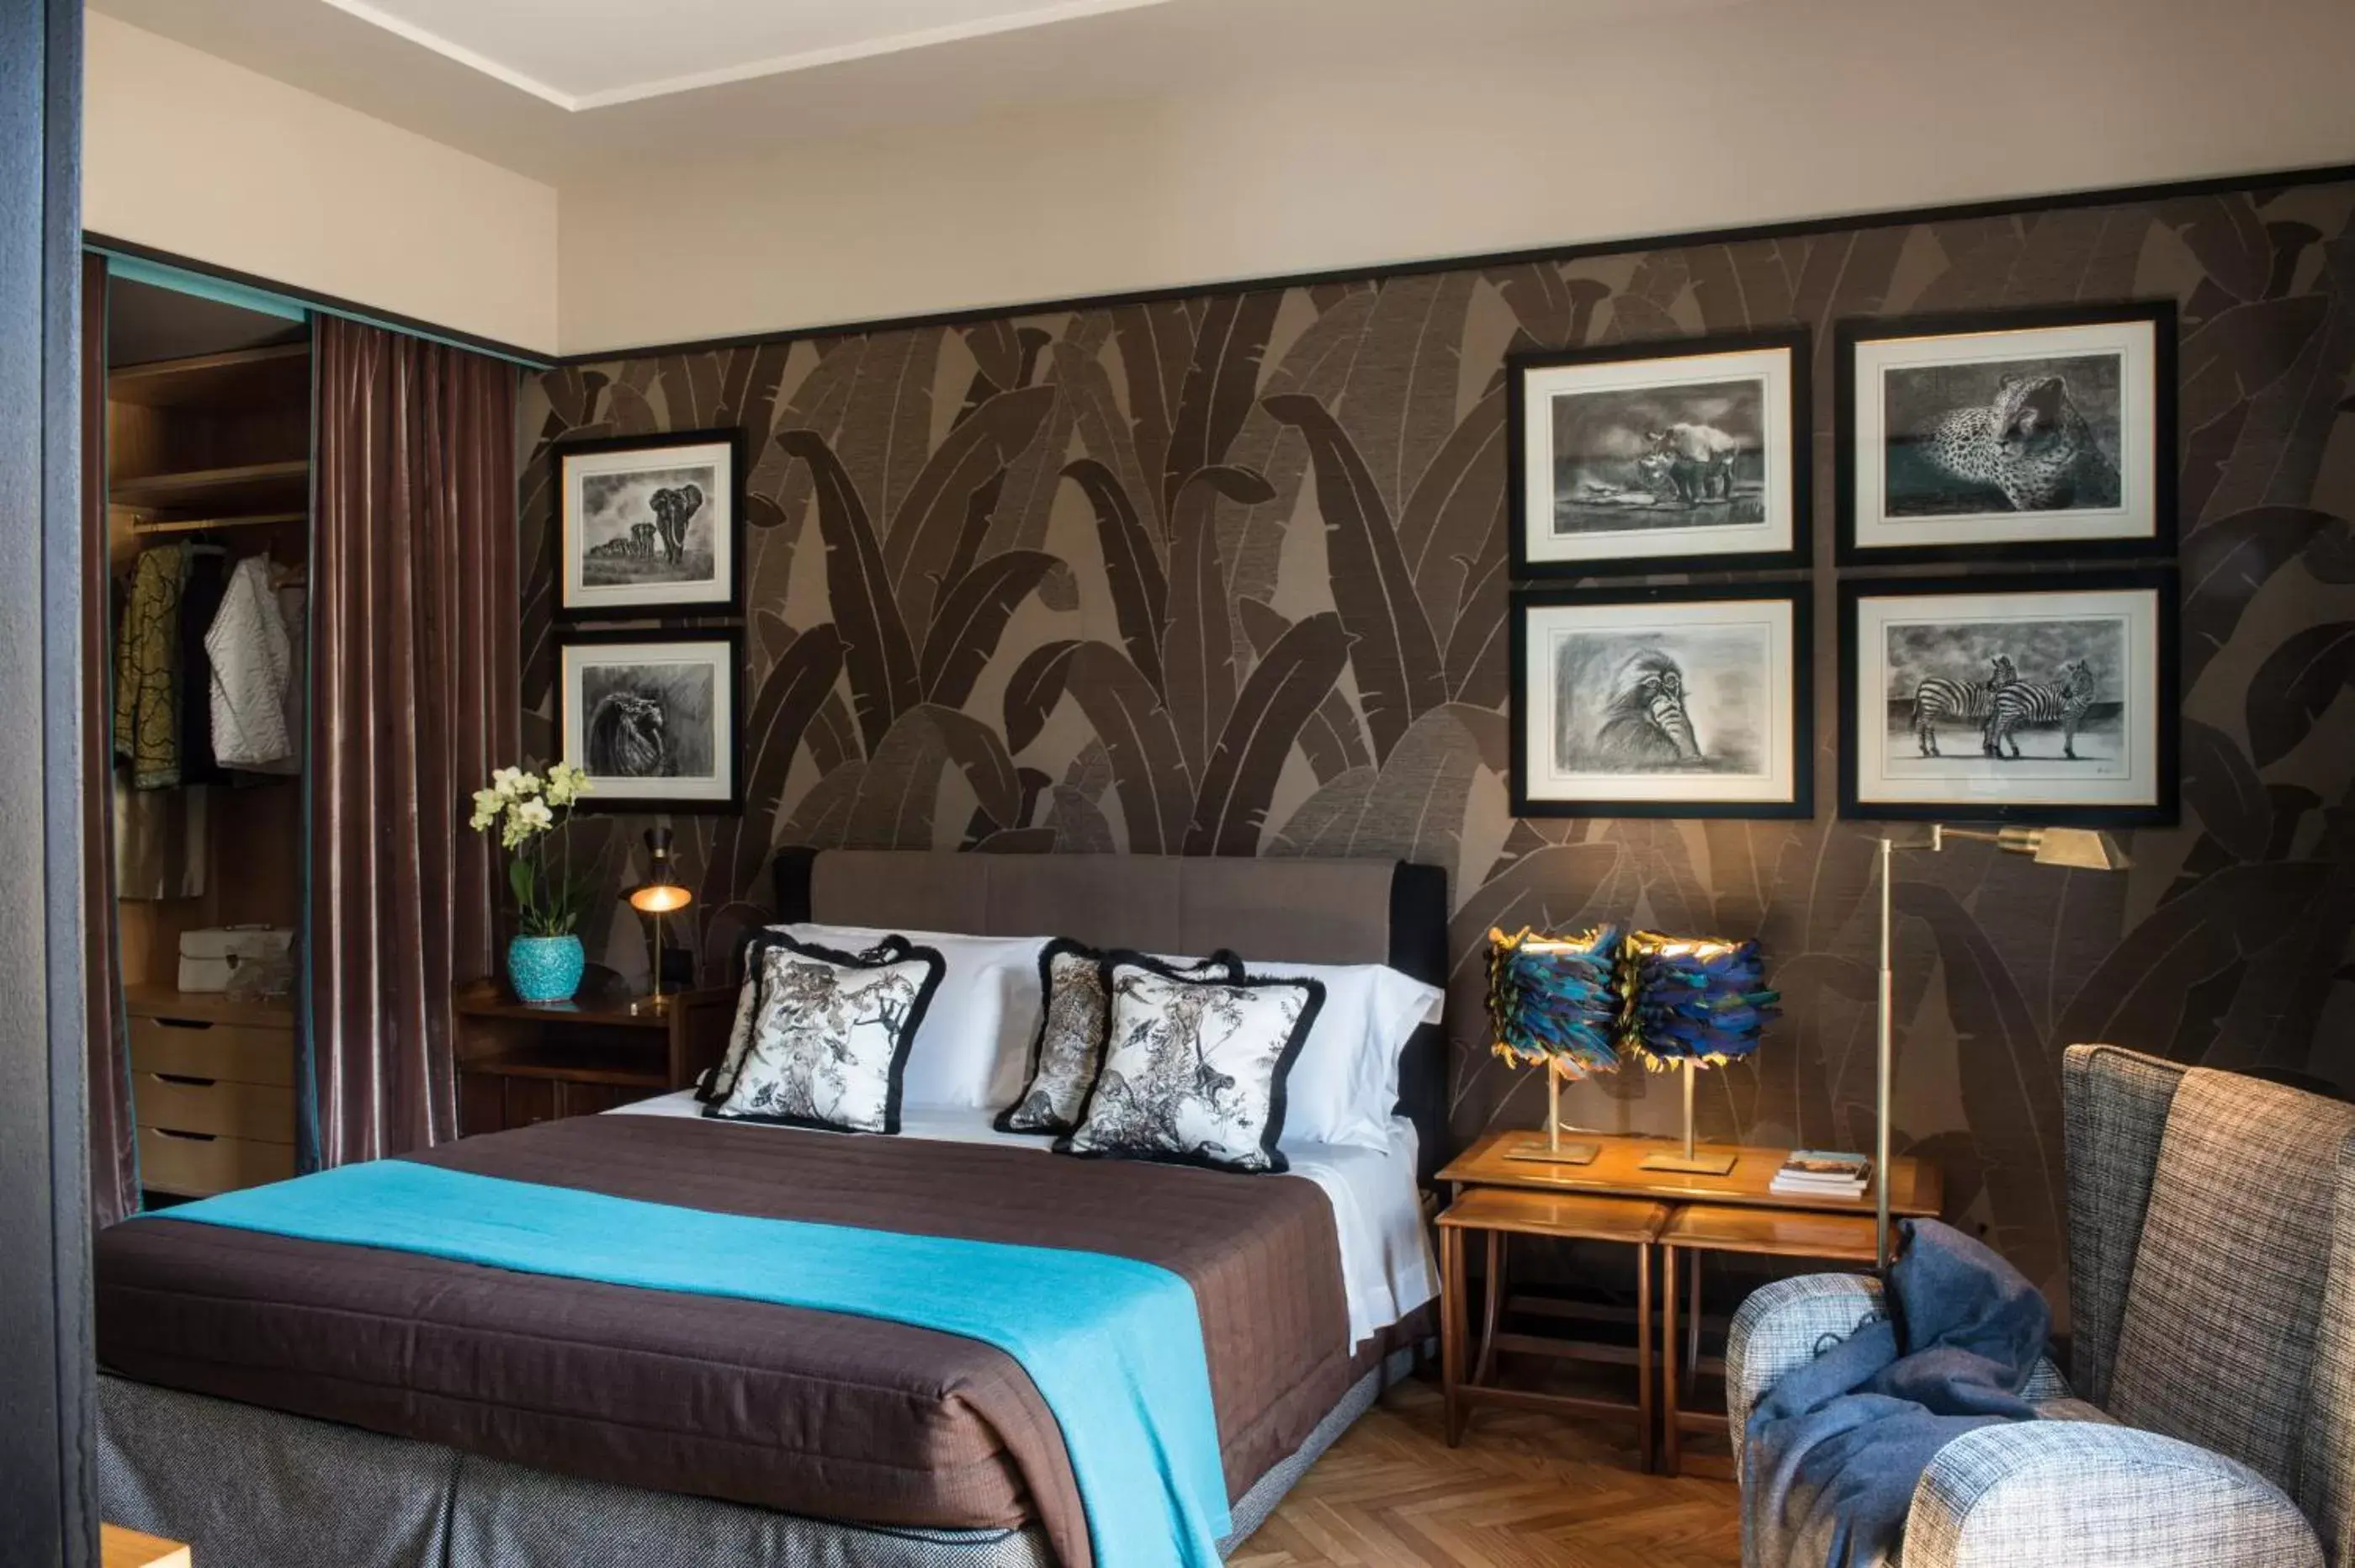 Bed, Room Photo in Velona's Jungle Luxury Suites